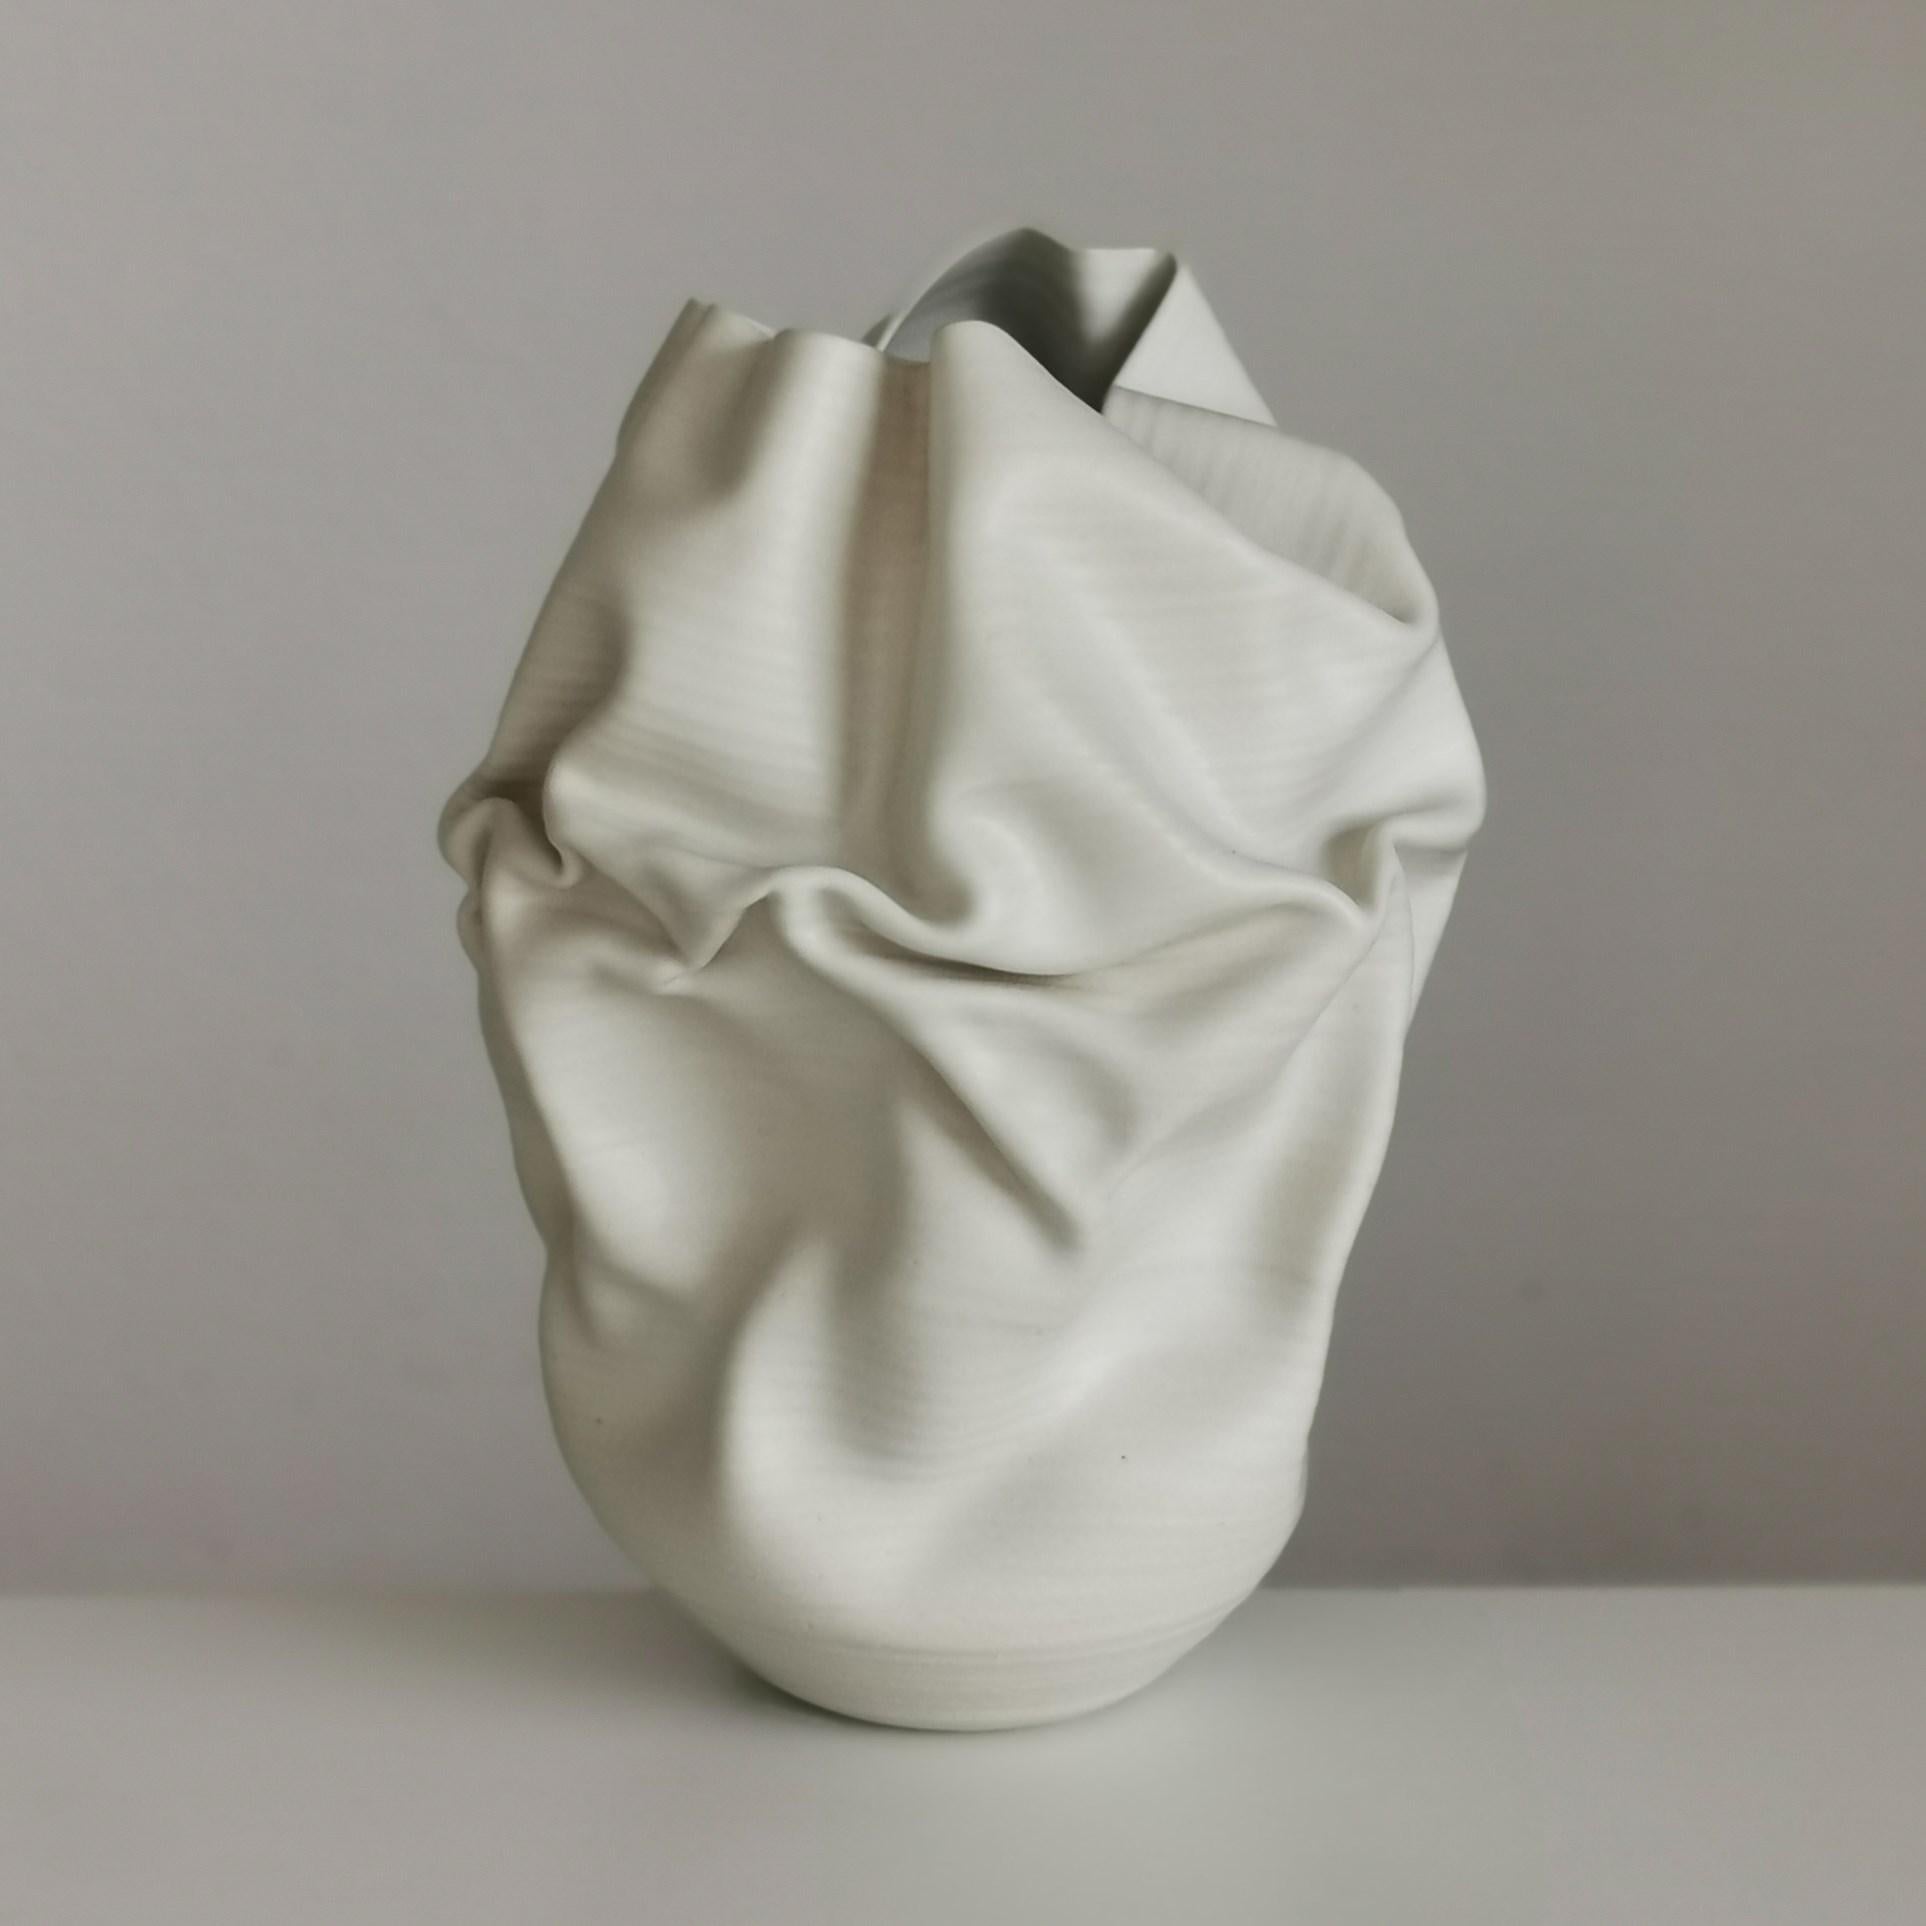 Undulating Crumpled Form No 51, a Ceramic Vessel by Nicholas Arroyave-Portela 7